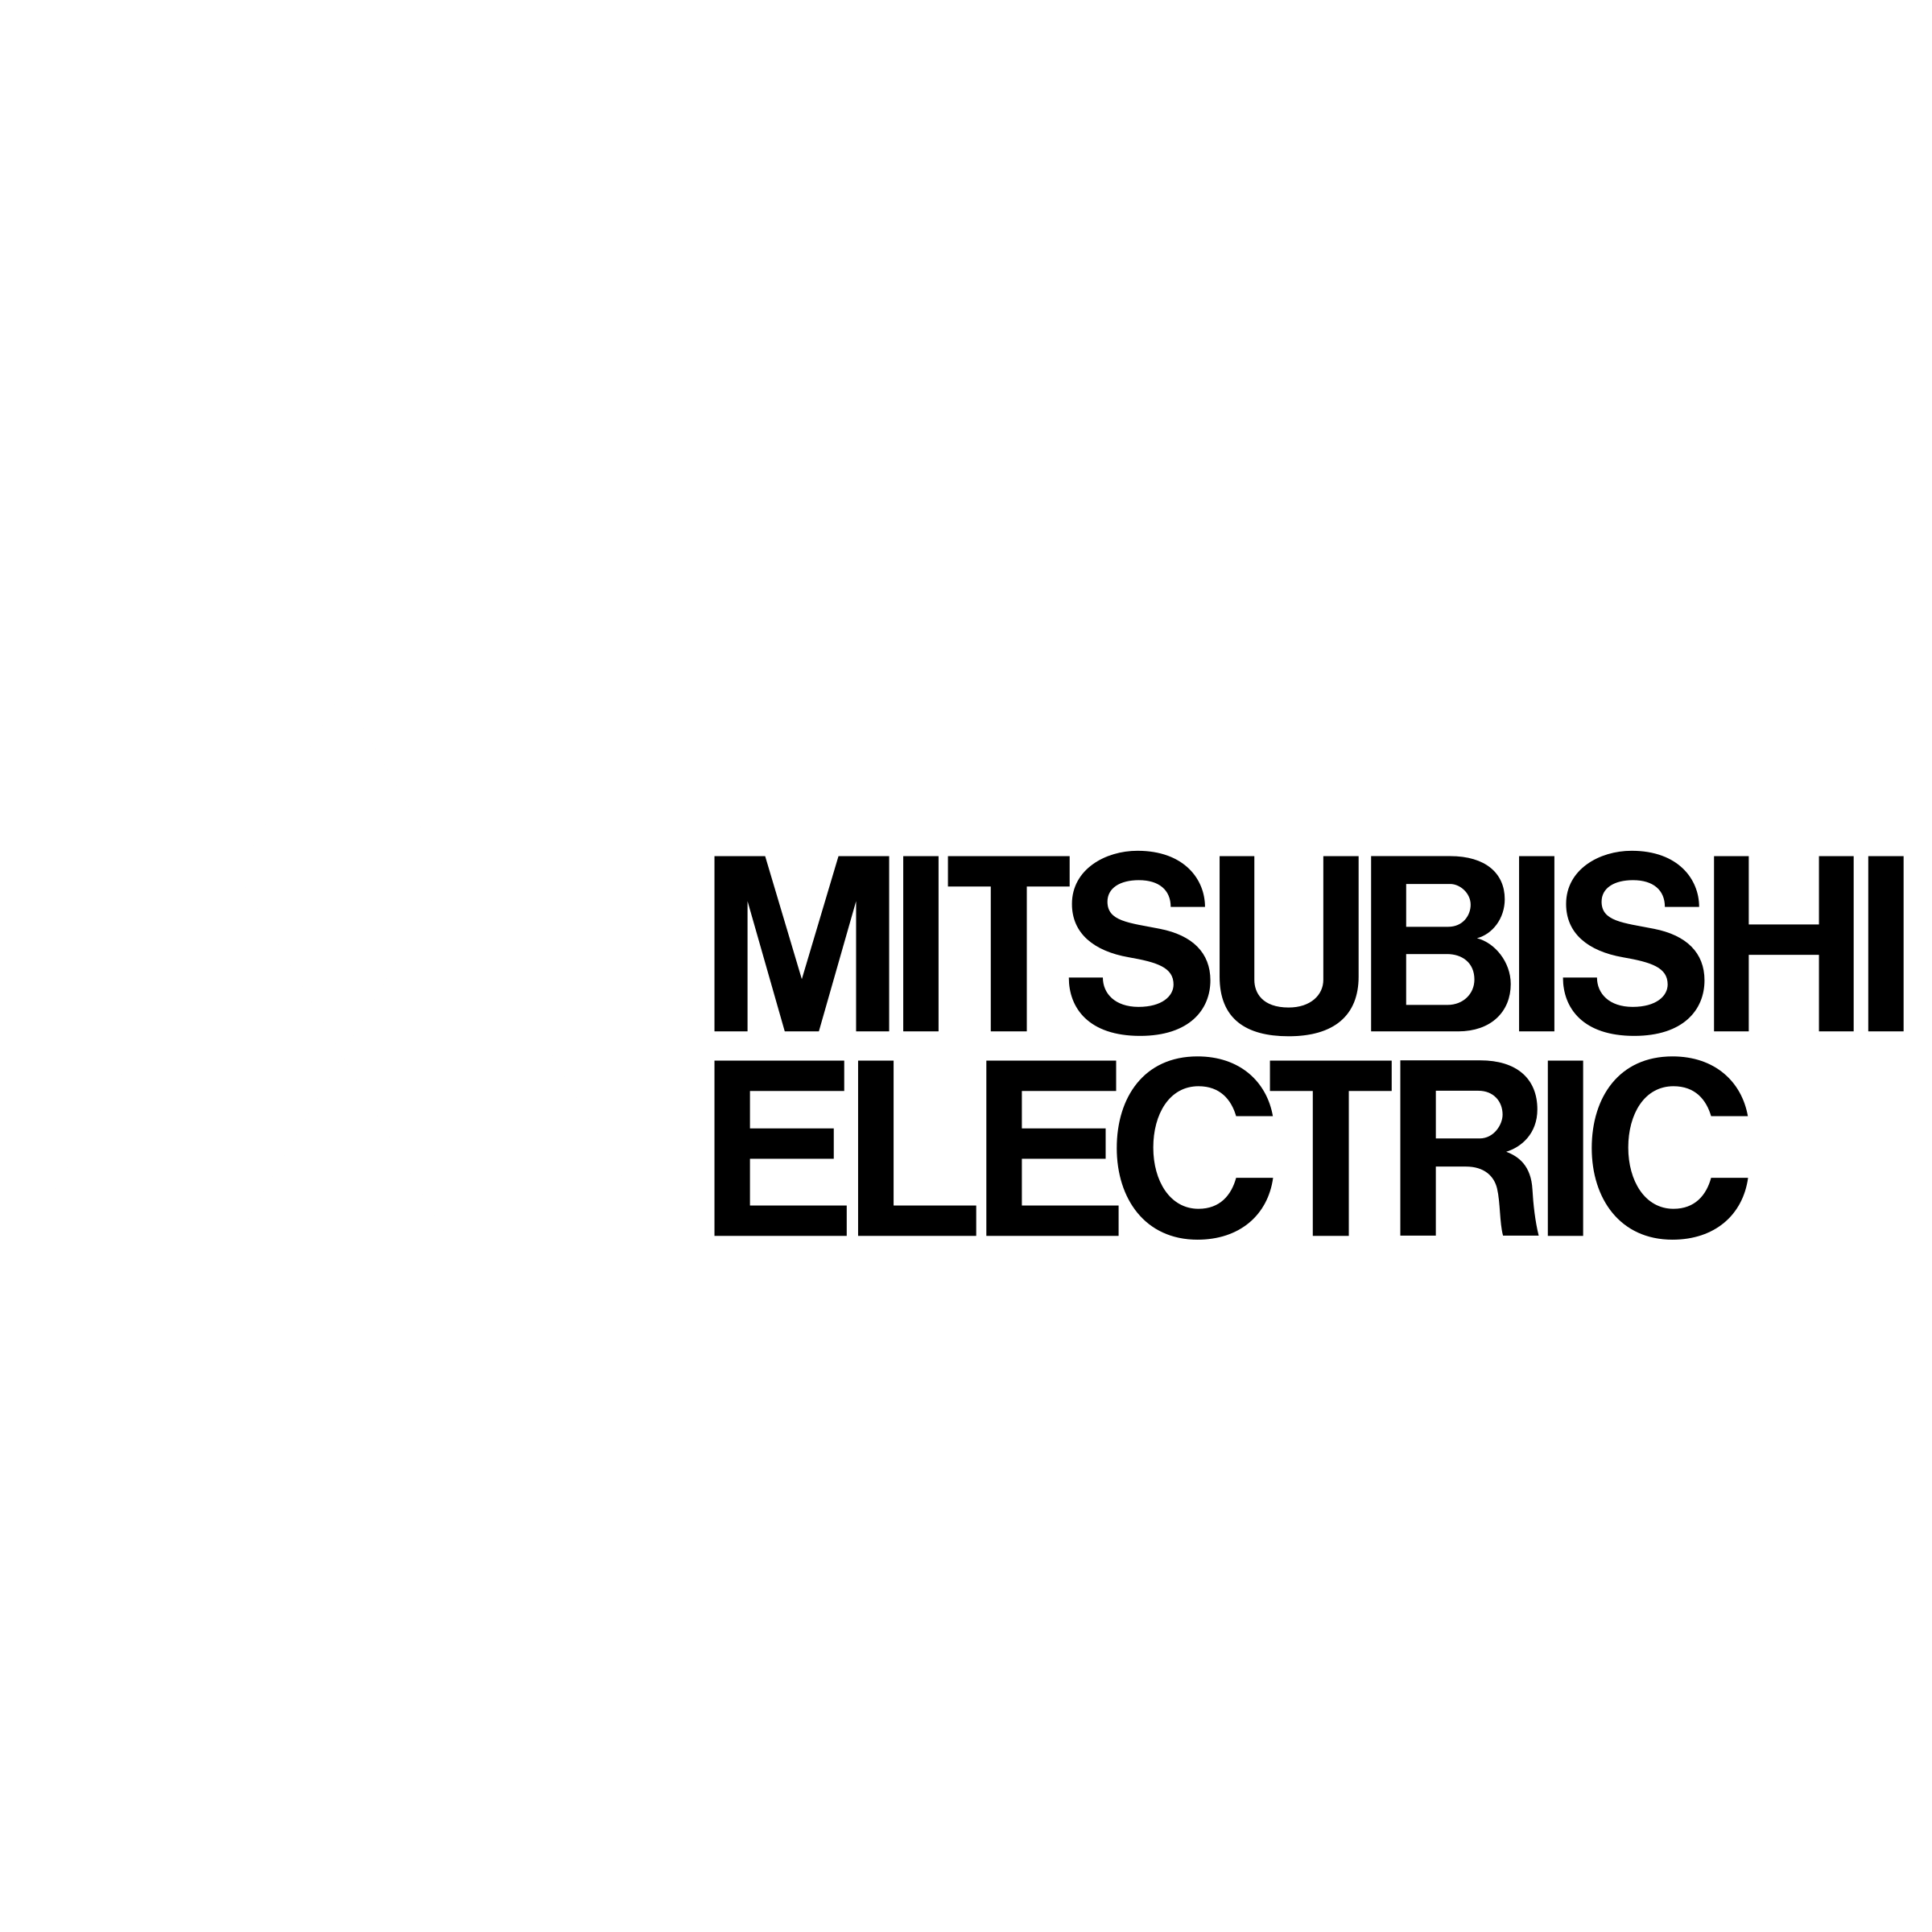 Mitsubishi Electric Logo - Mitsubishi Electric Logo PNG Transparent & SVG Vector - Freebie Supply